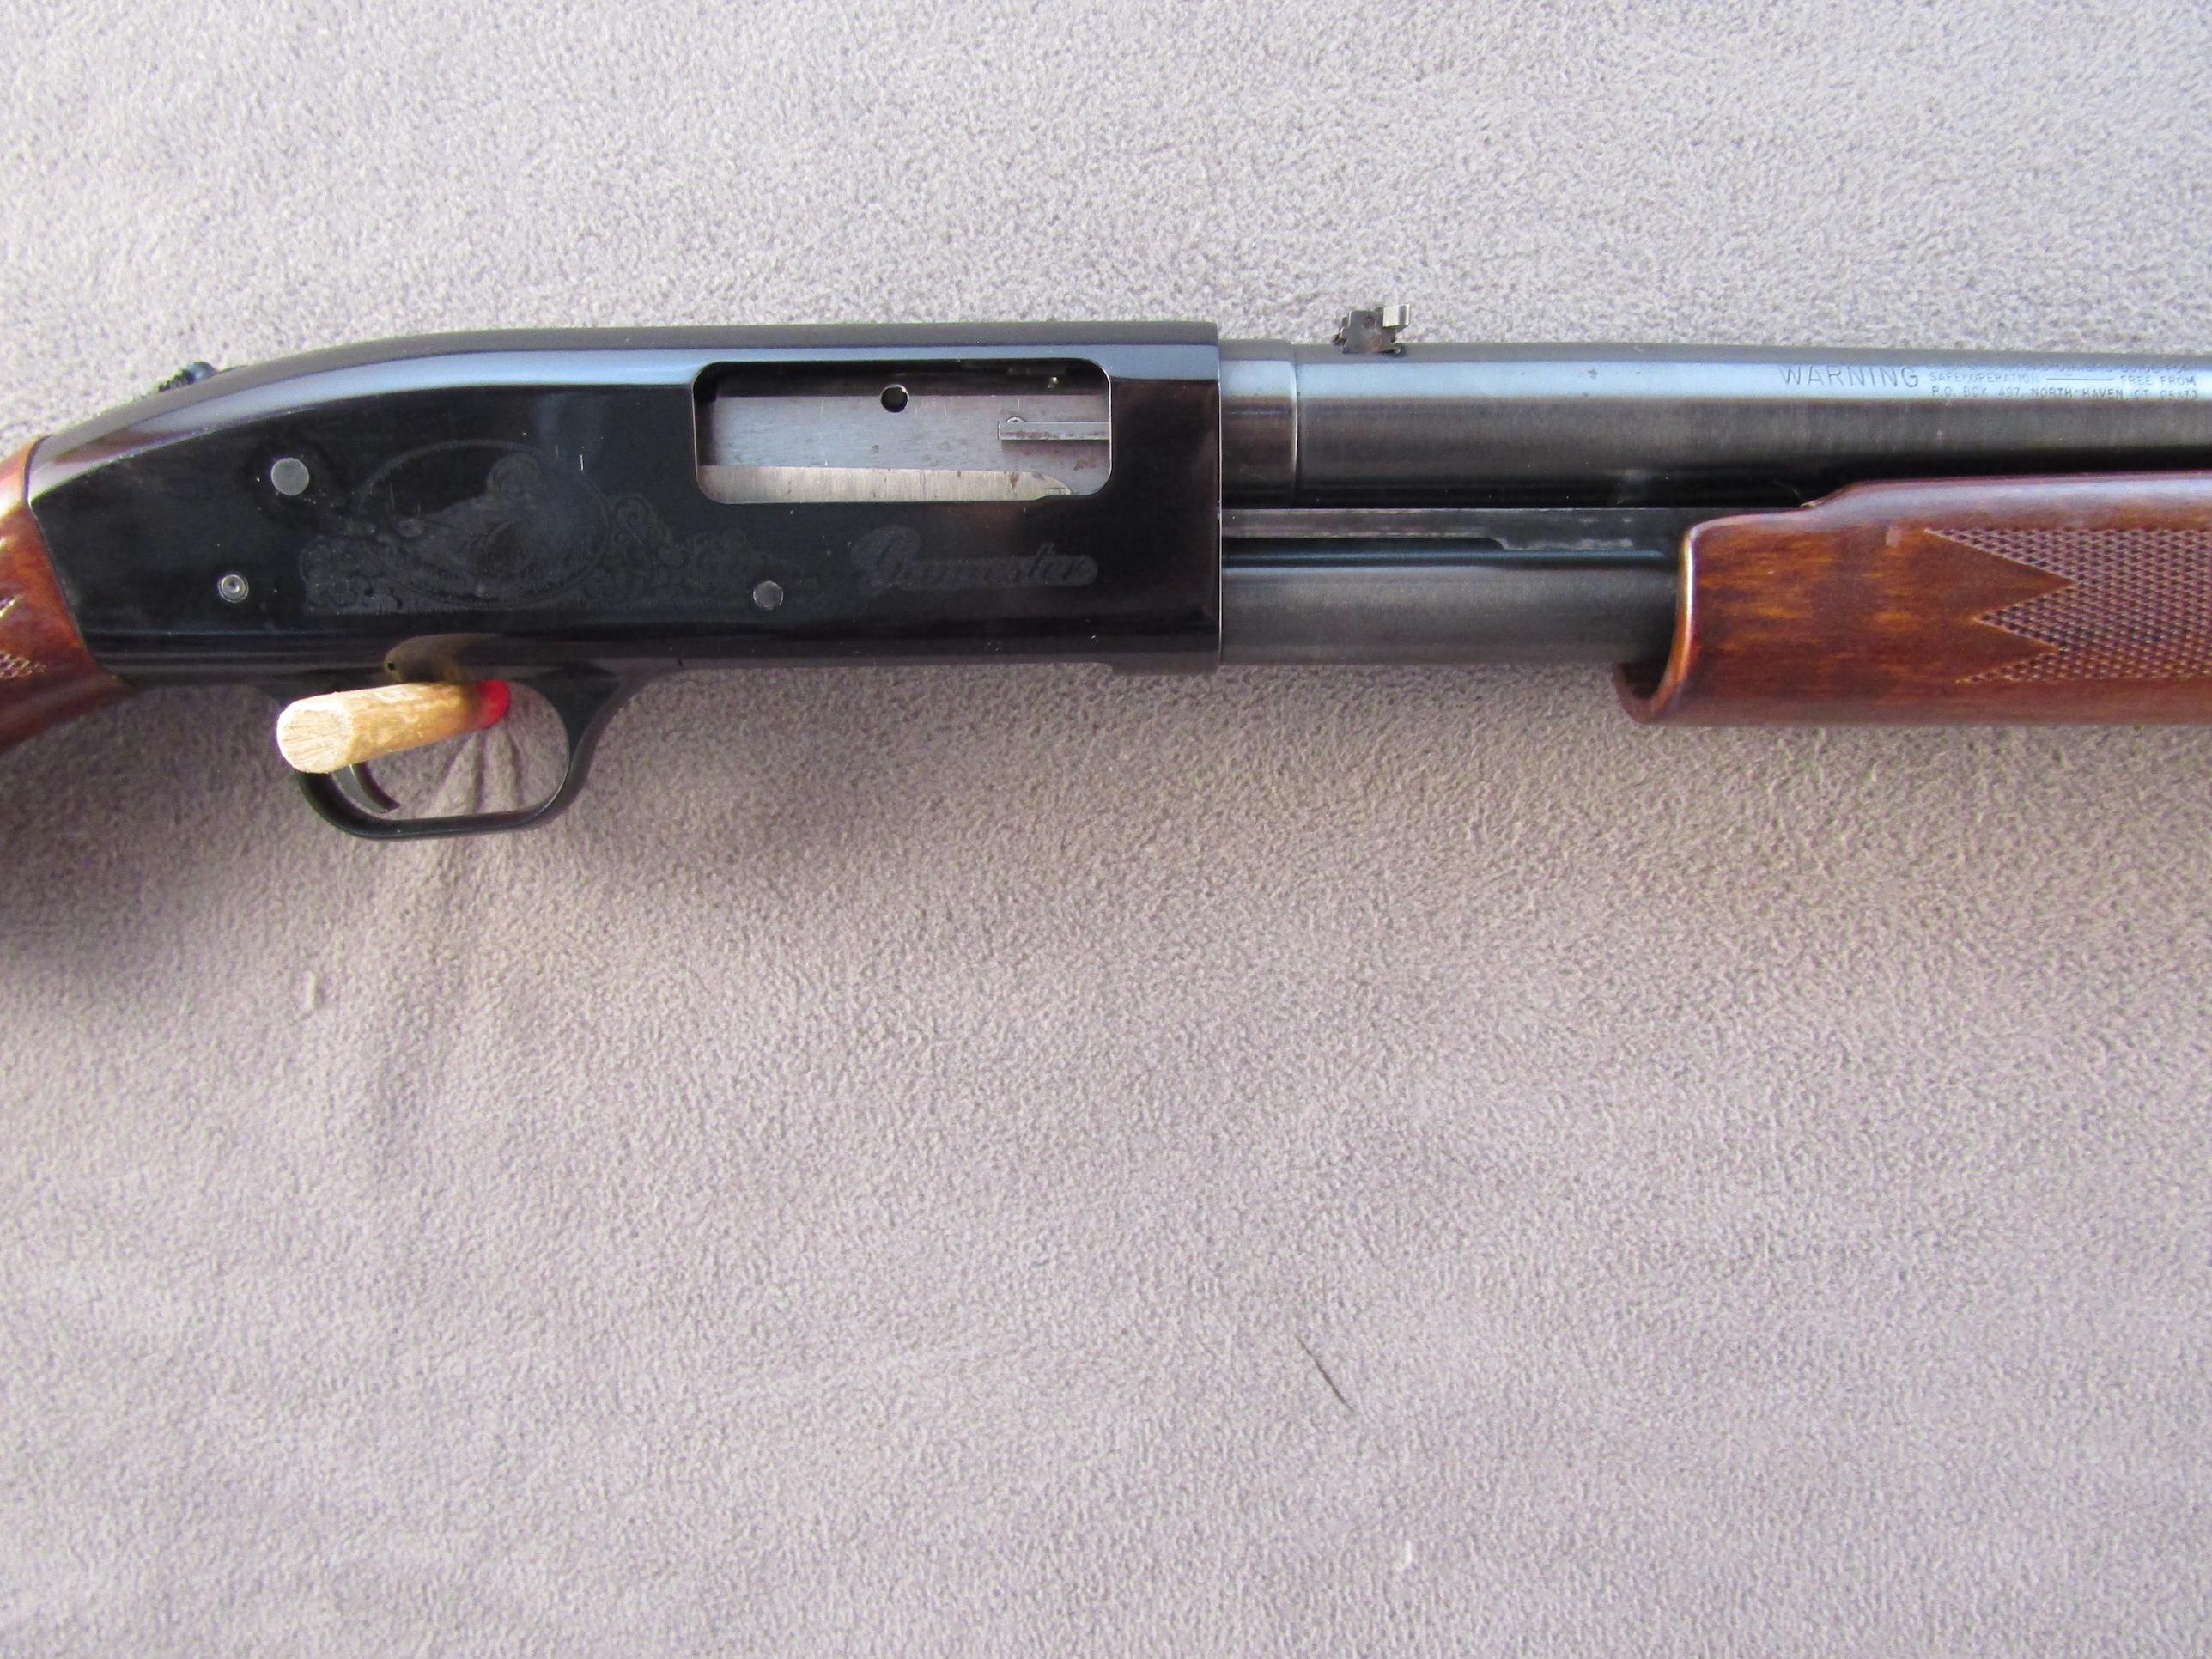 MOSSBERG Model 500A, Pump-Action Shotgun, 12g, S#J341458